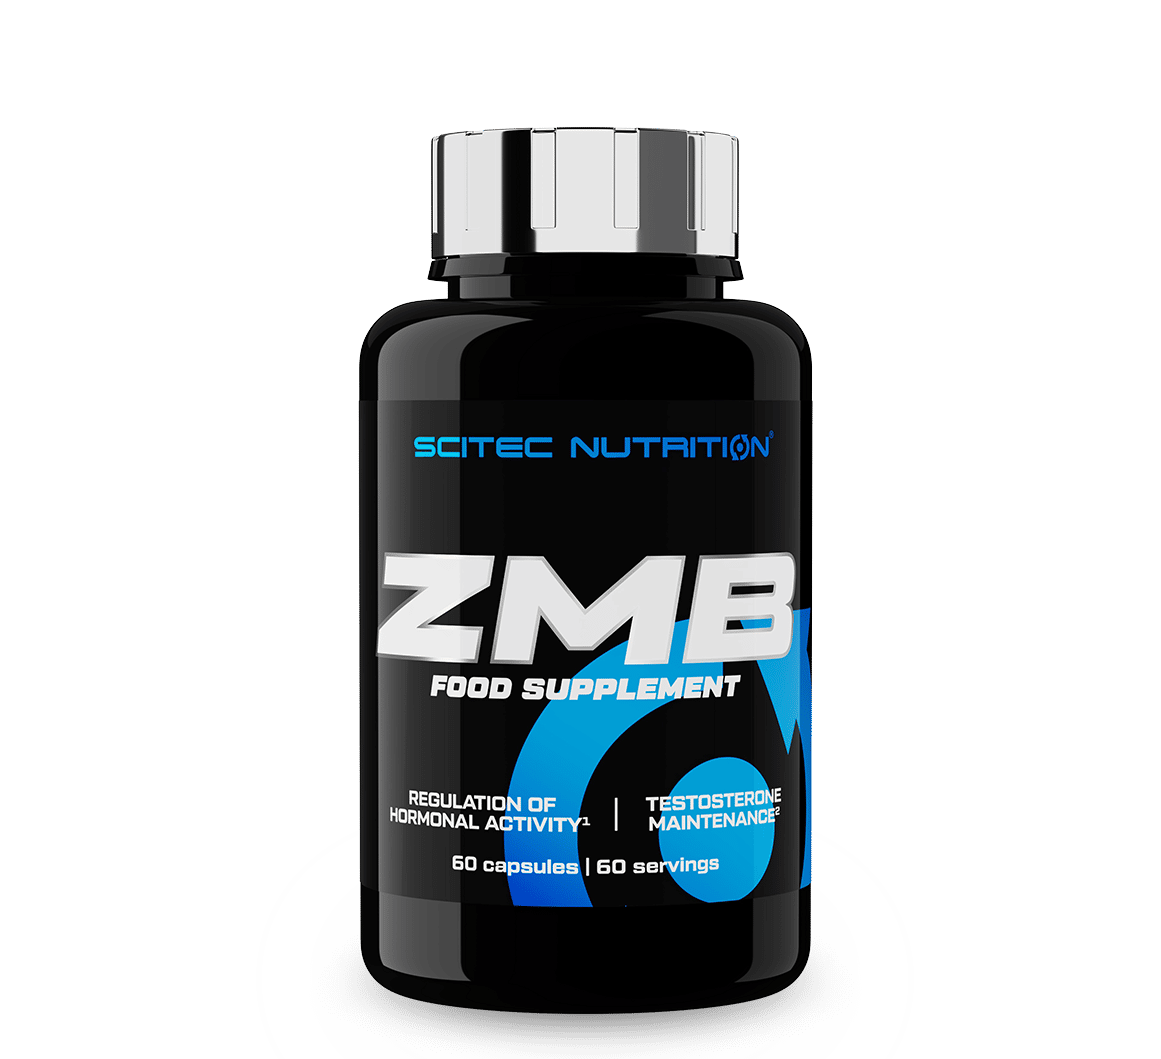 Scitec Nutrition ZMB (60 Caps)